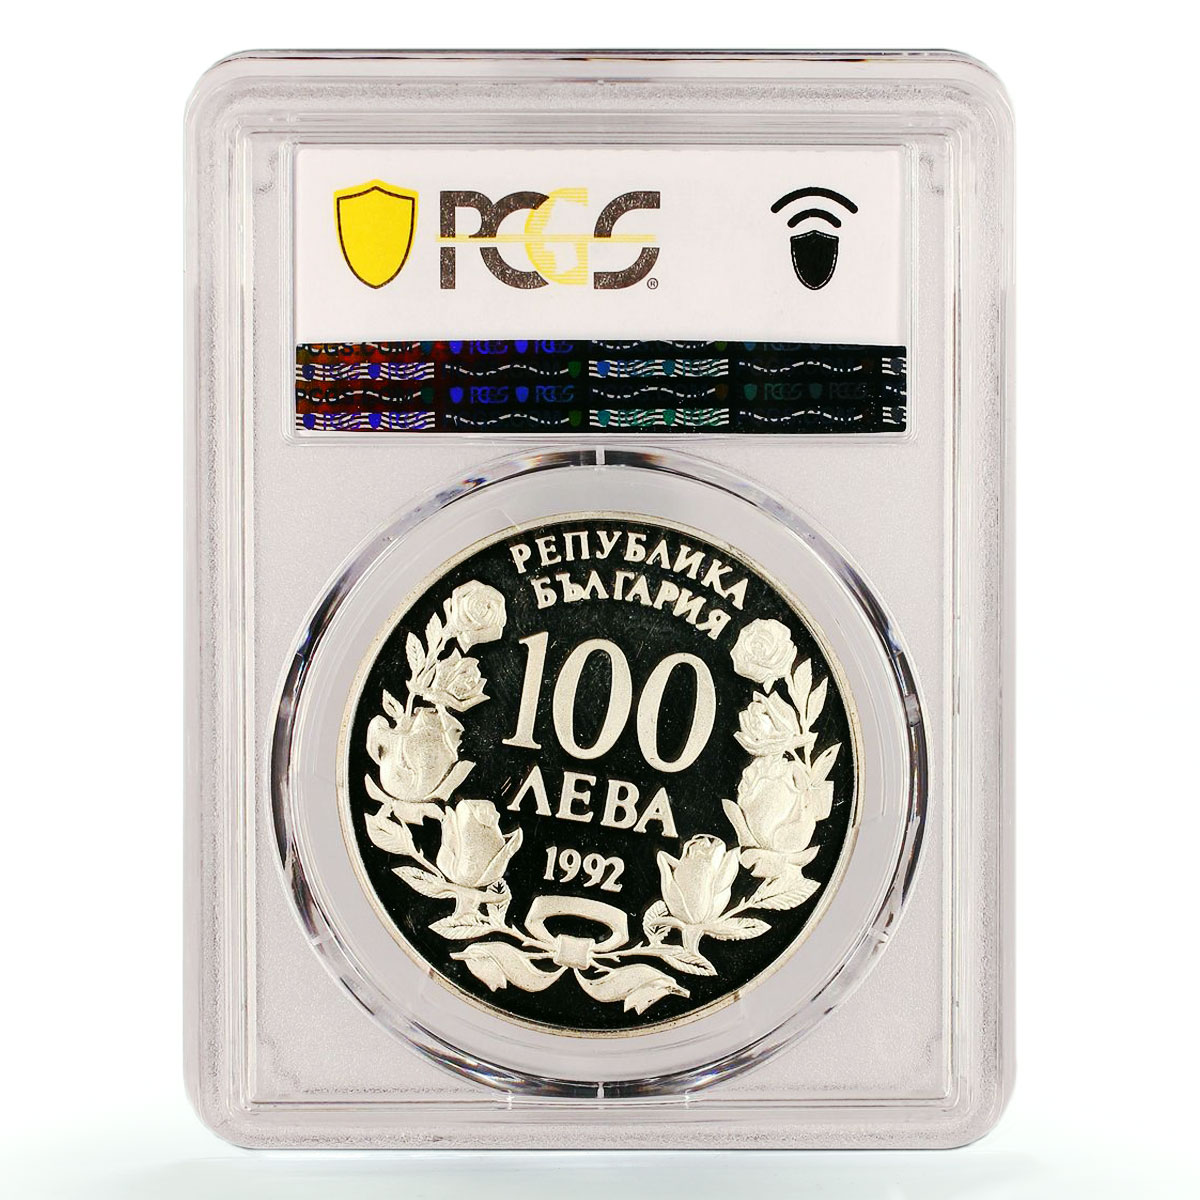 Bulgaria 100 leva The Radetsky Steam Liner Ship PR64 PCGS silver coin 1992